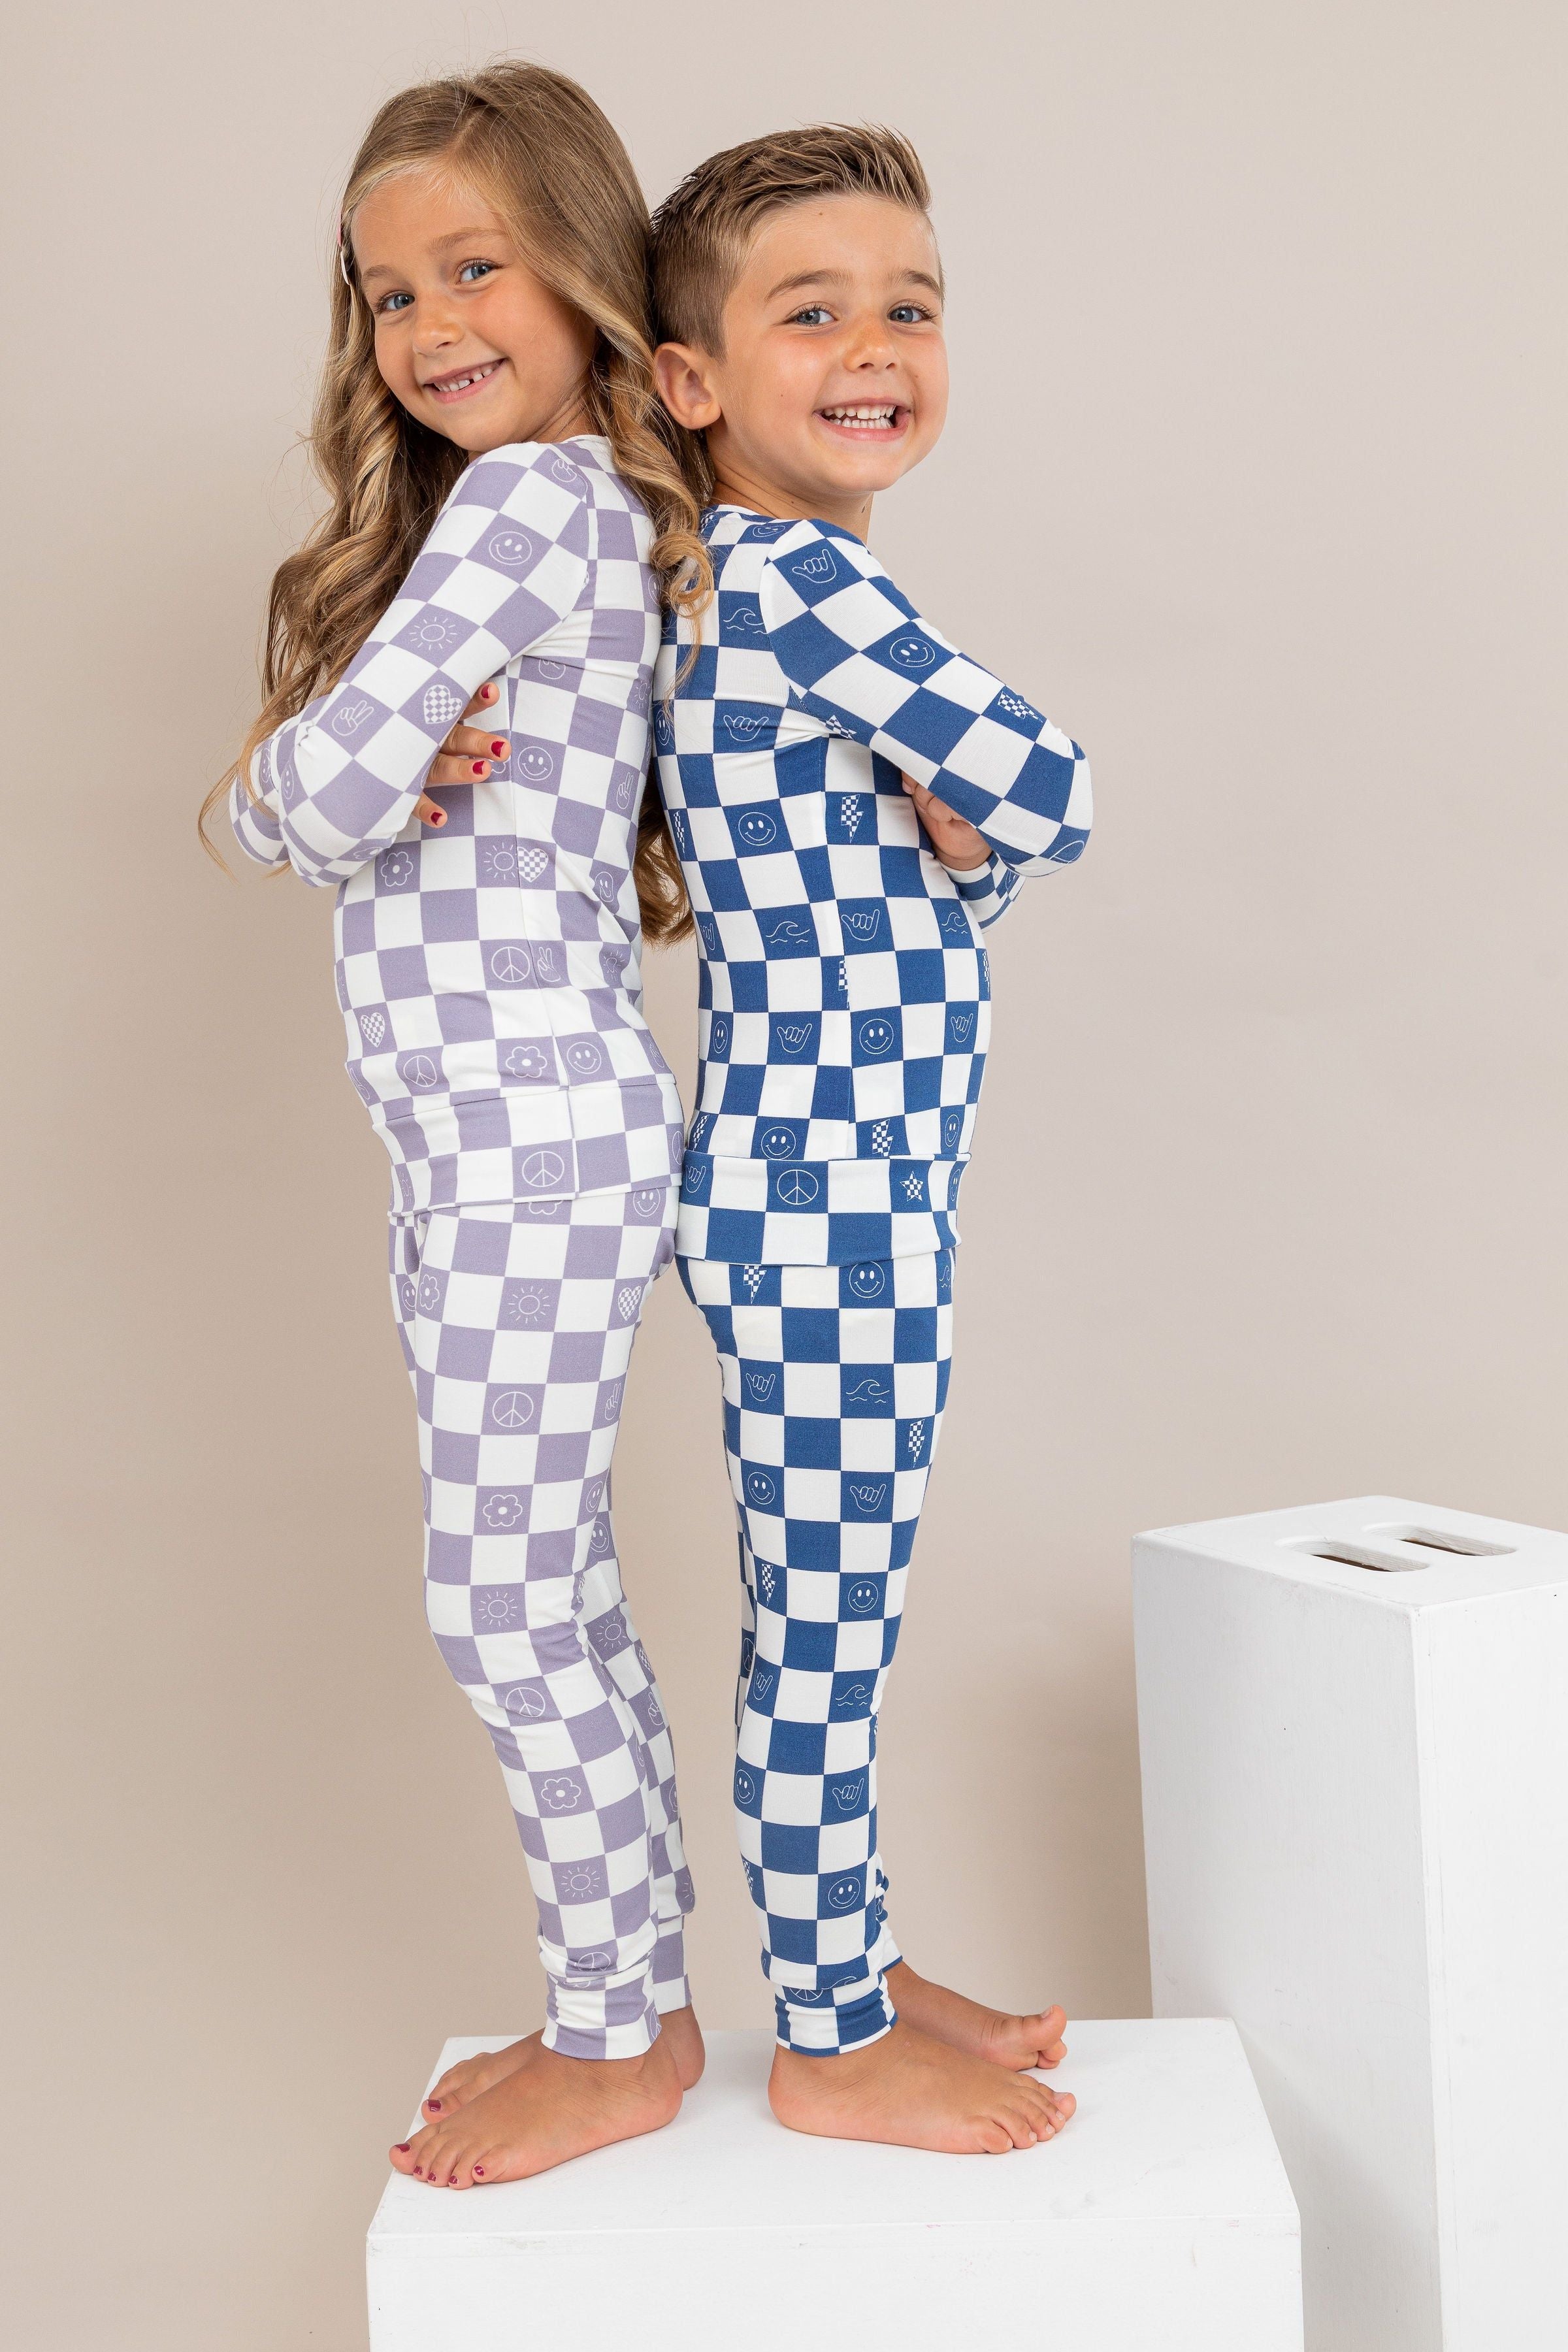 Pajama Set - Check It Out - Lavender